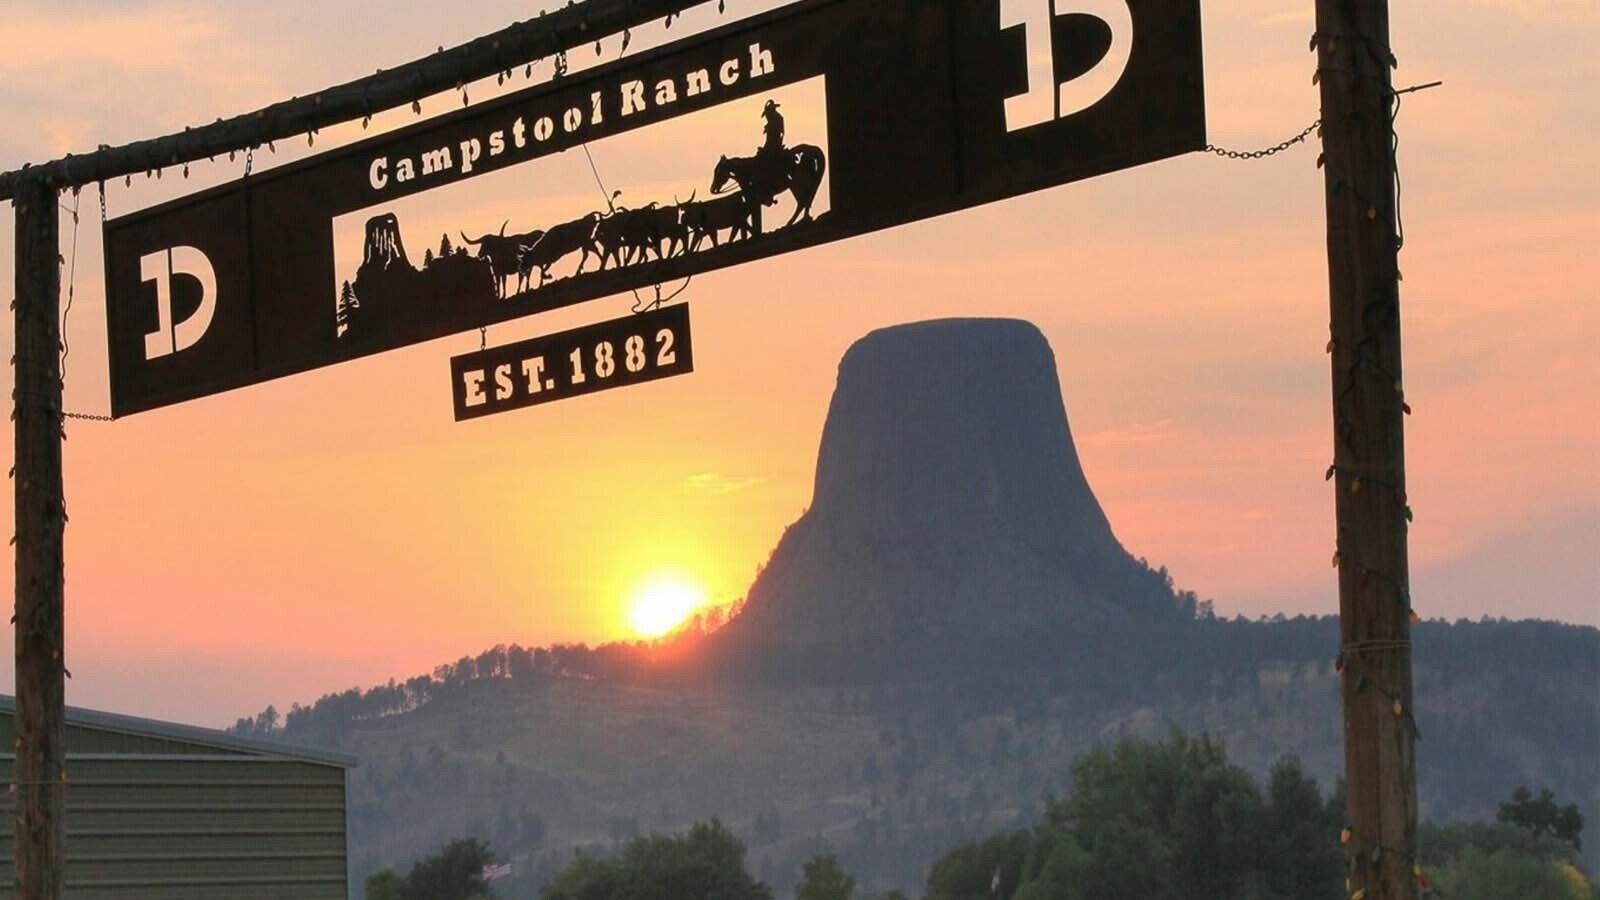 Campstool ranch 10 8 23